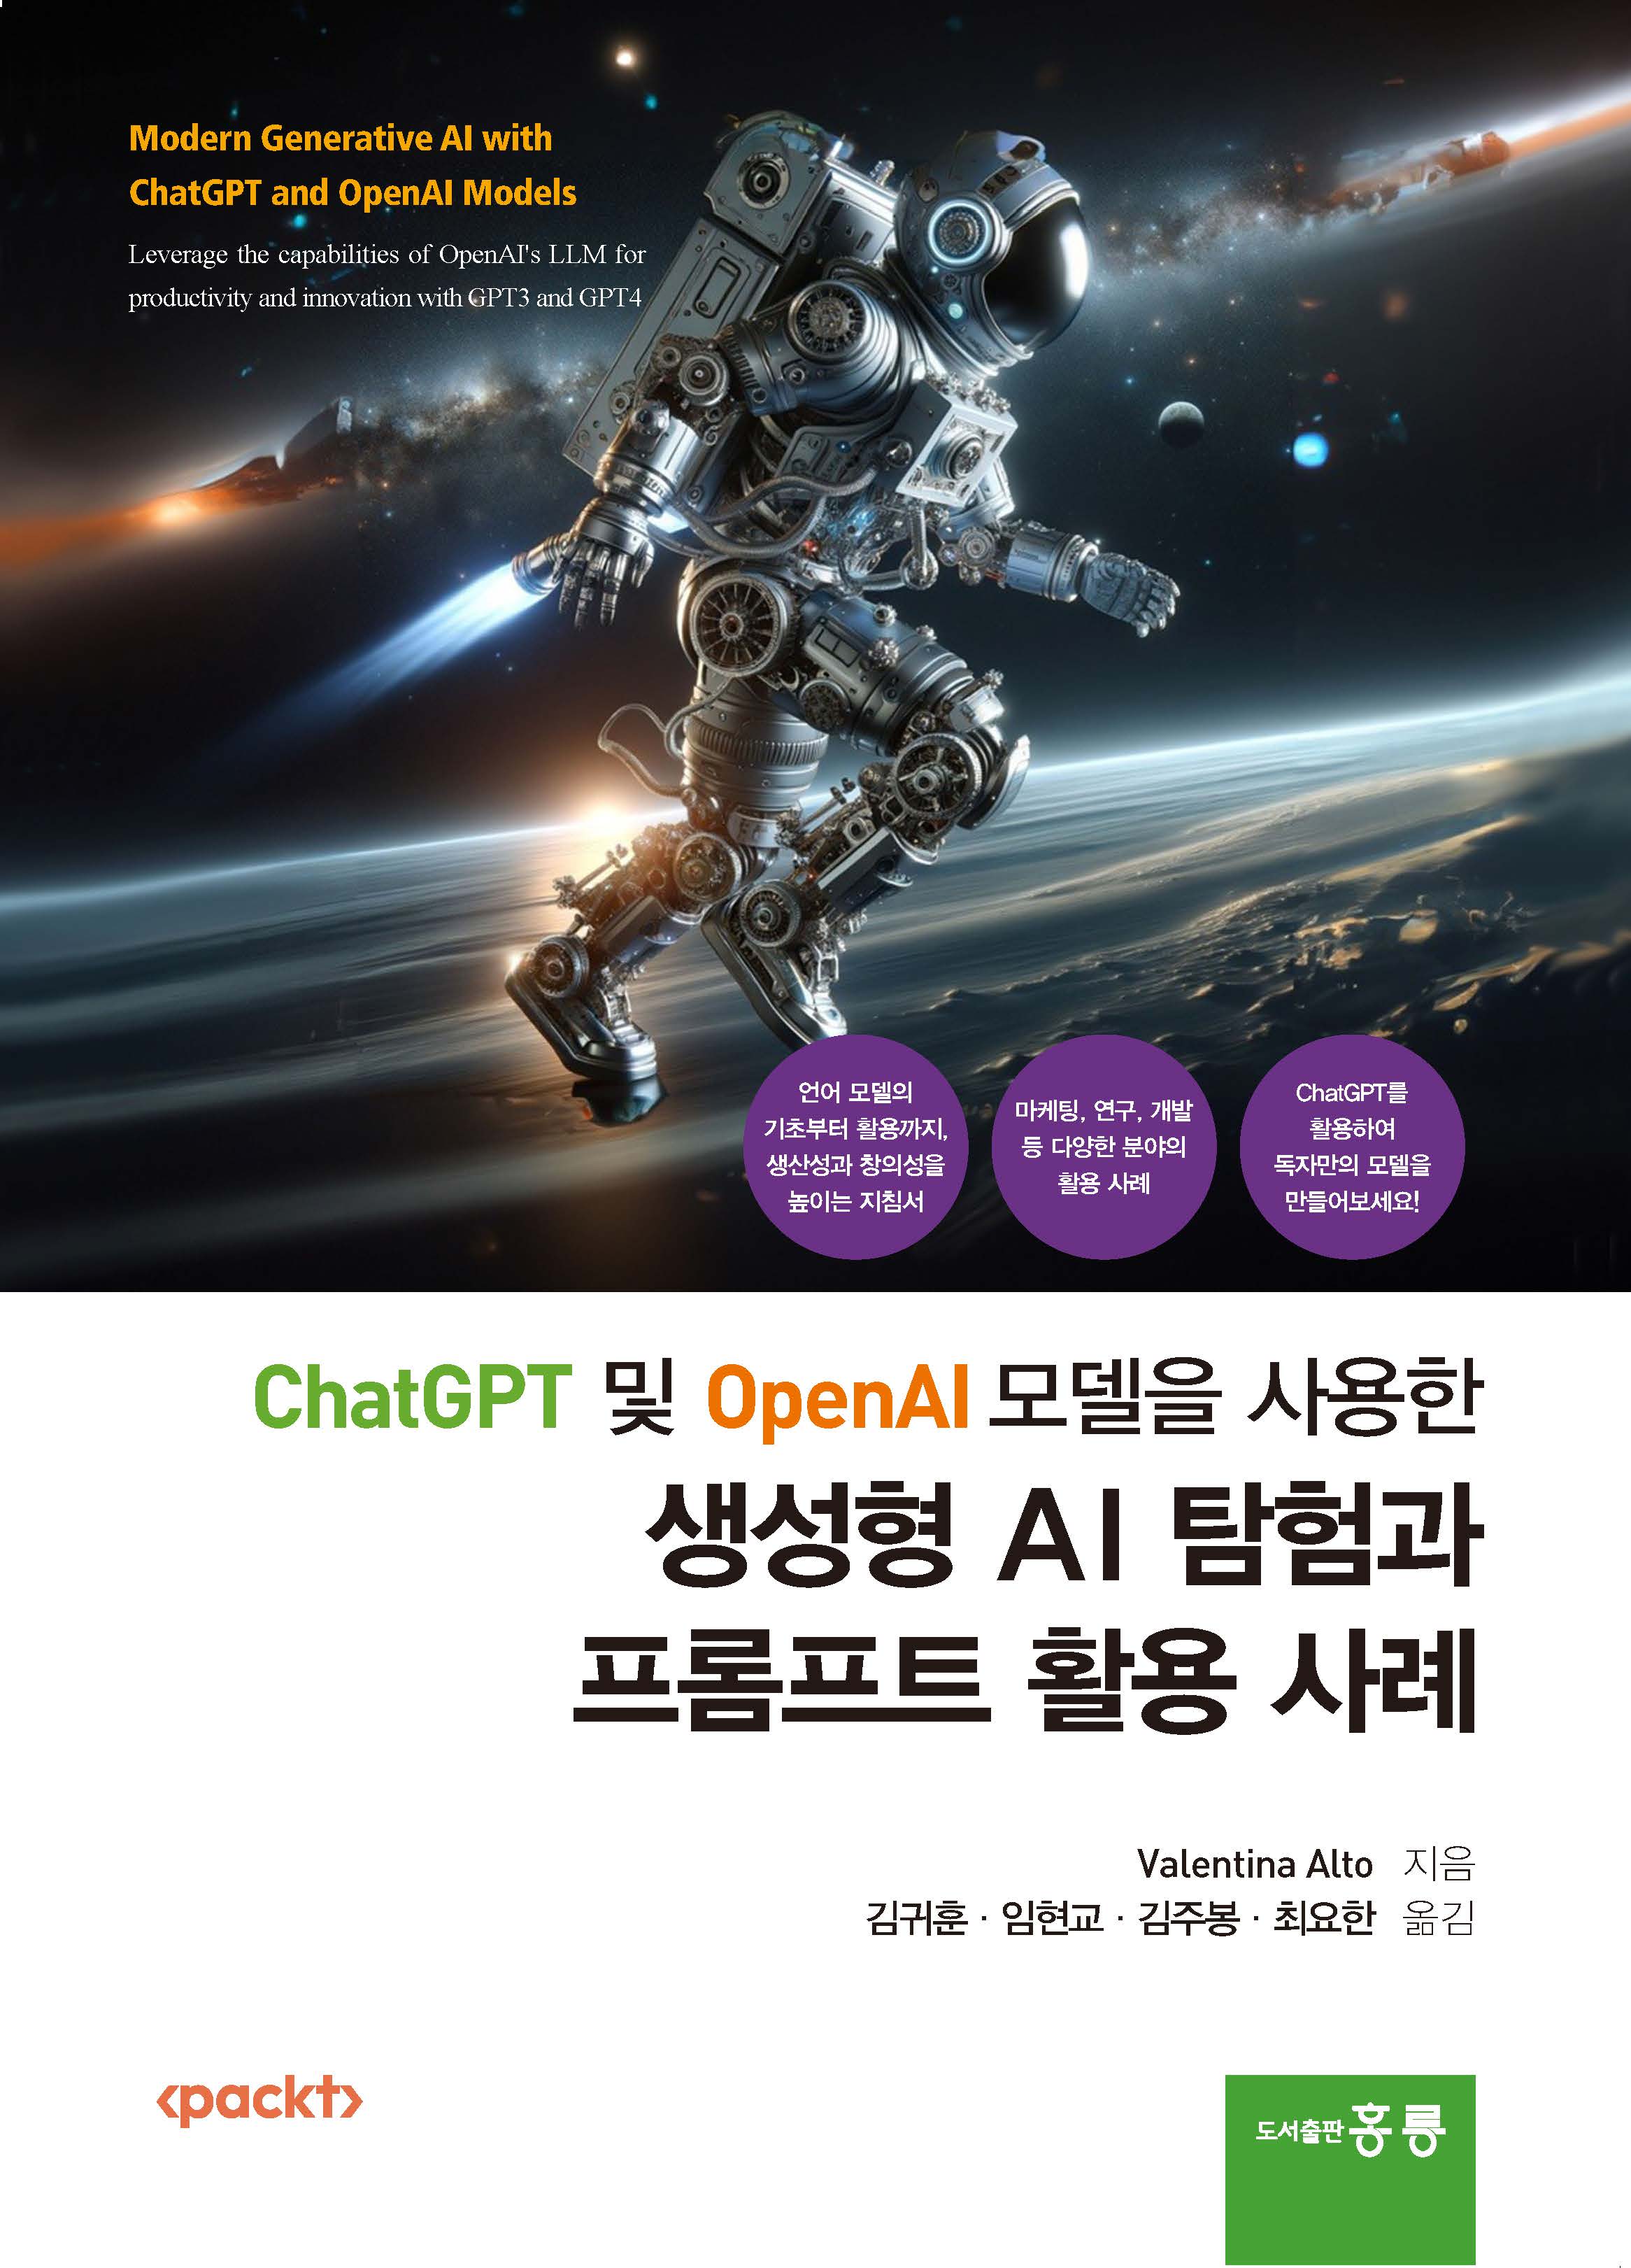 ChatGPT 및 OpenAI 모델을 사용한 생성형 AI탐험과 프롬프트 활용 사례